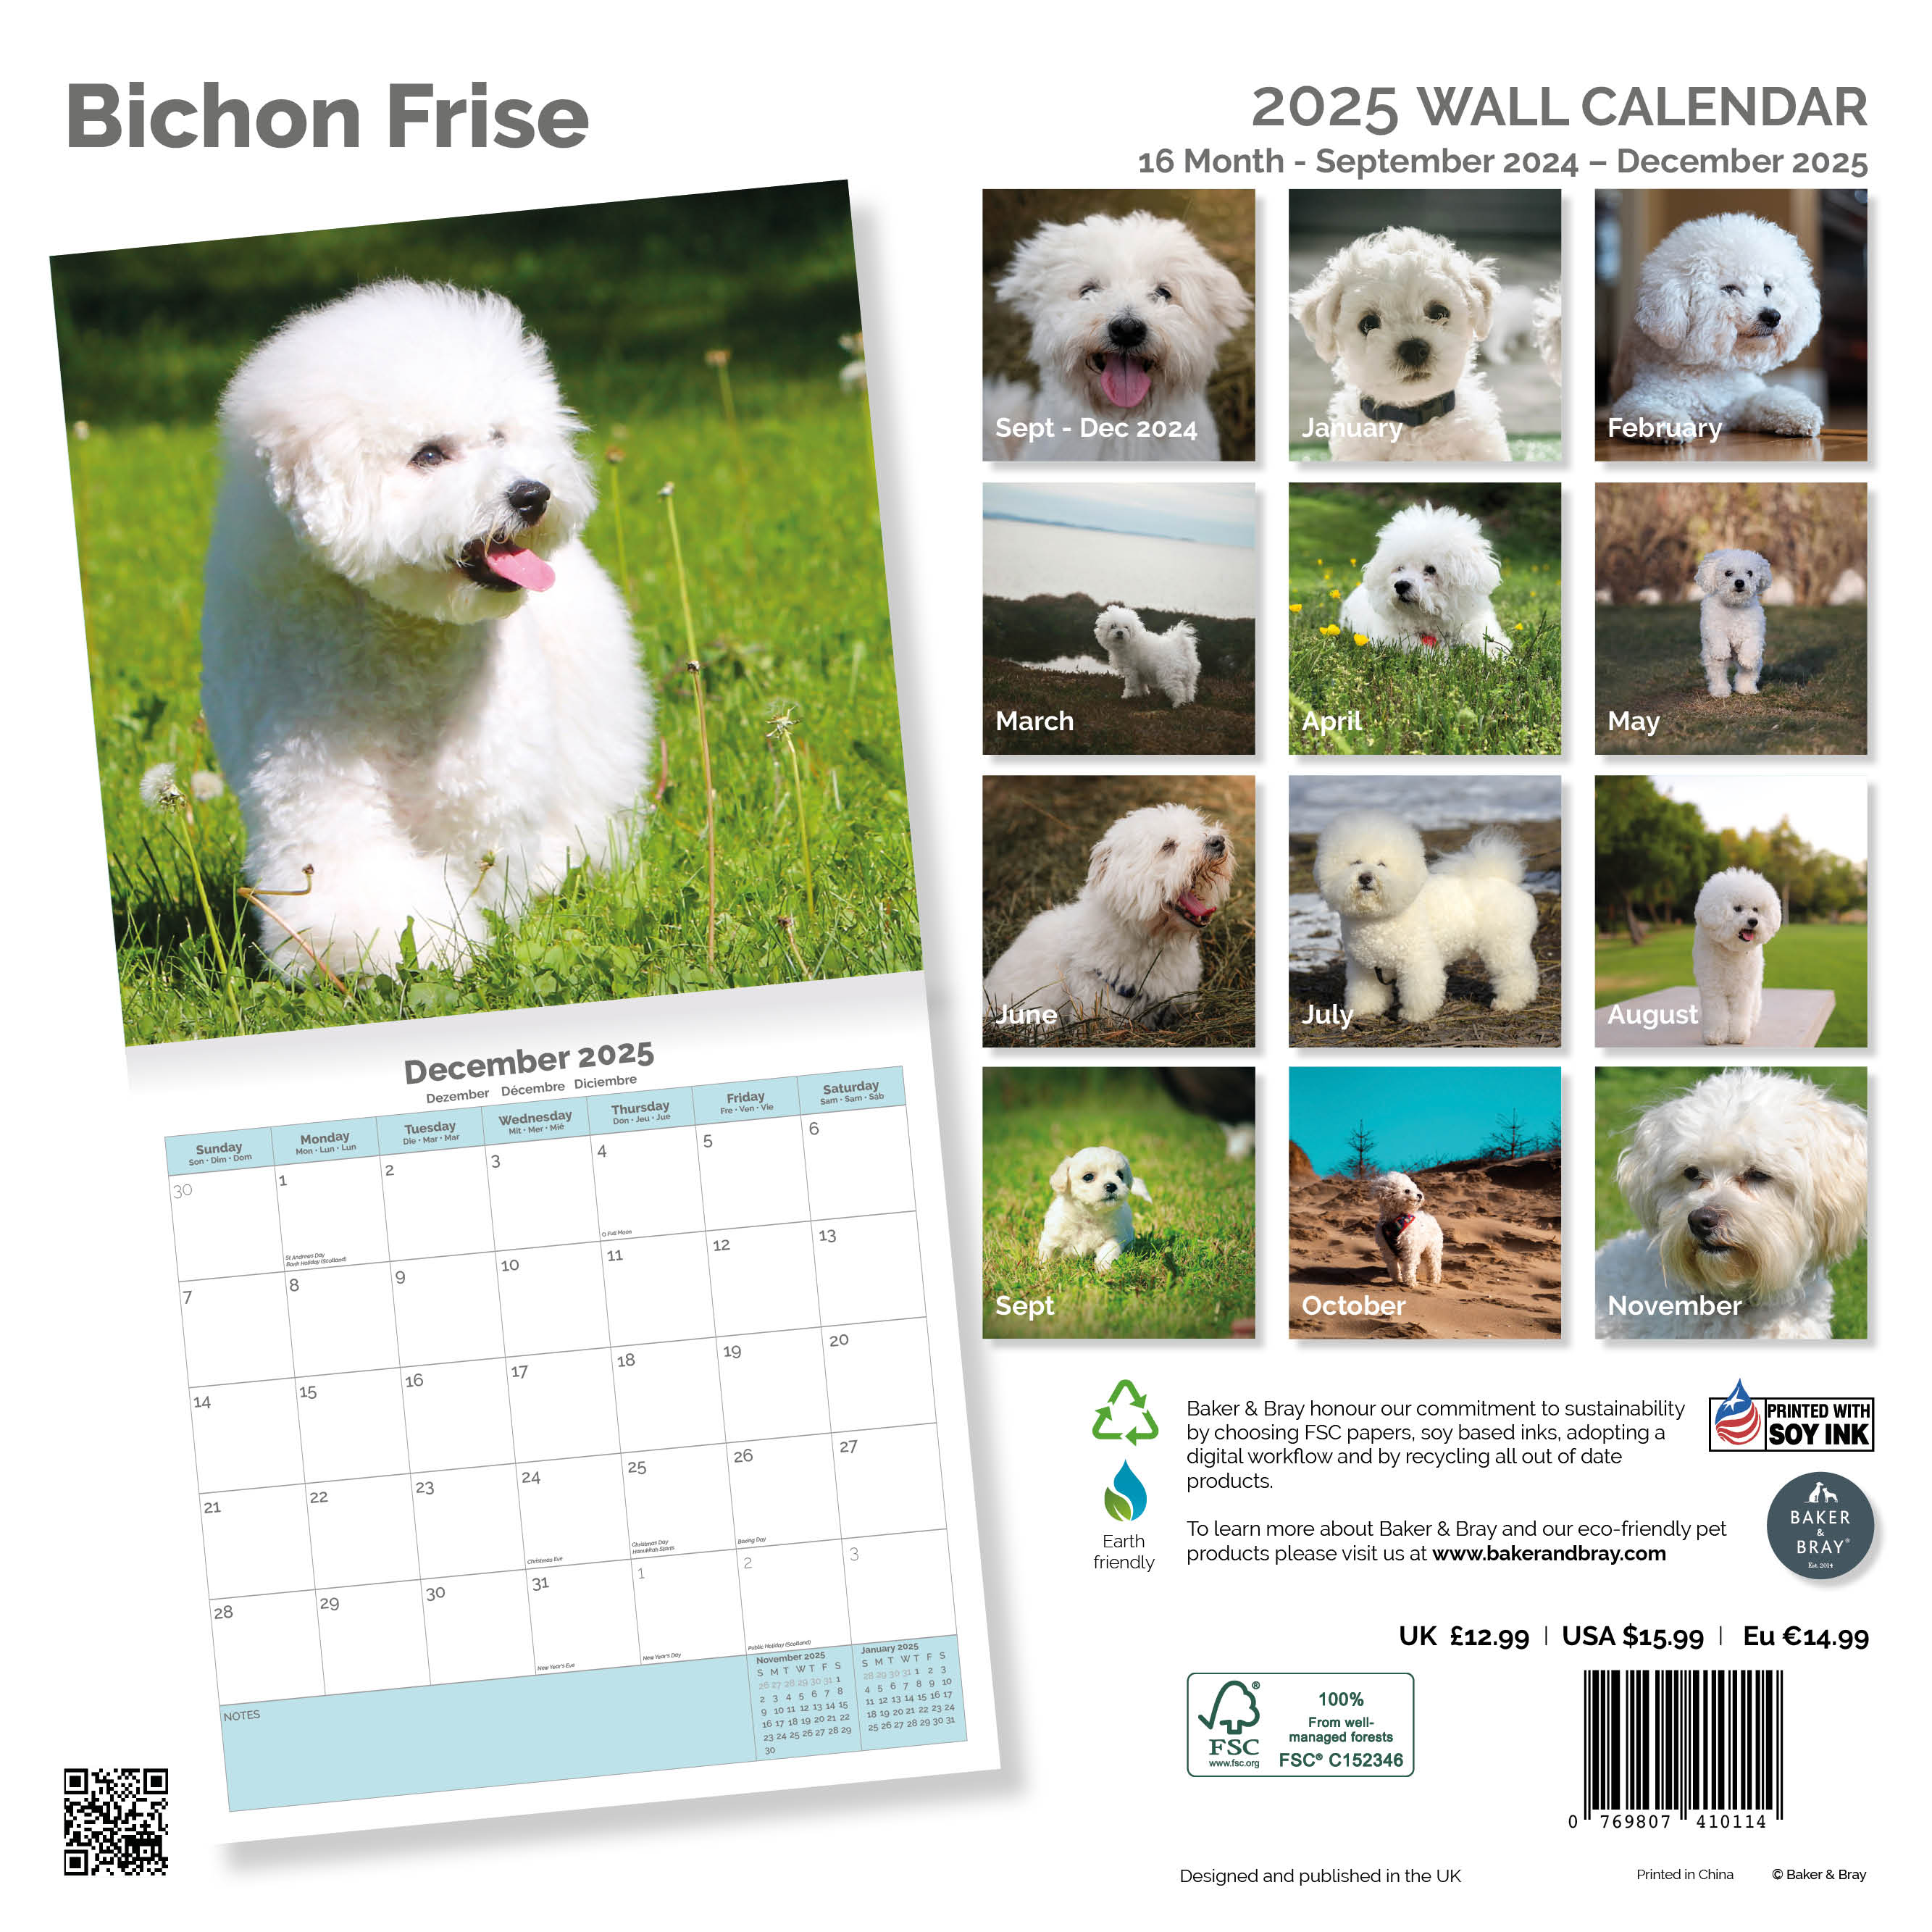 Bichon Frise Calendar 2025